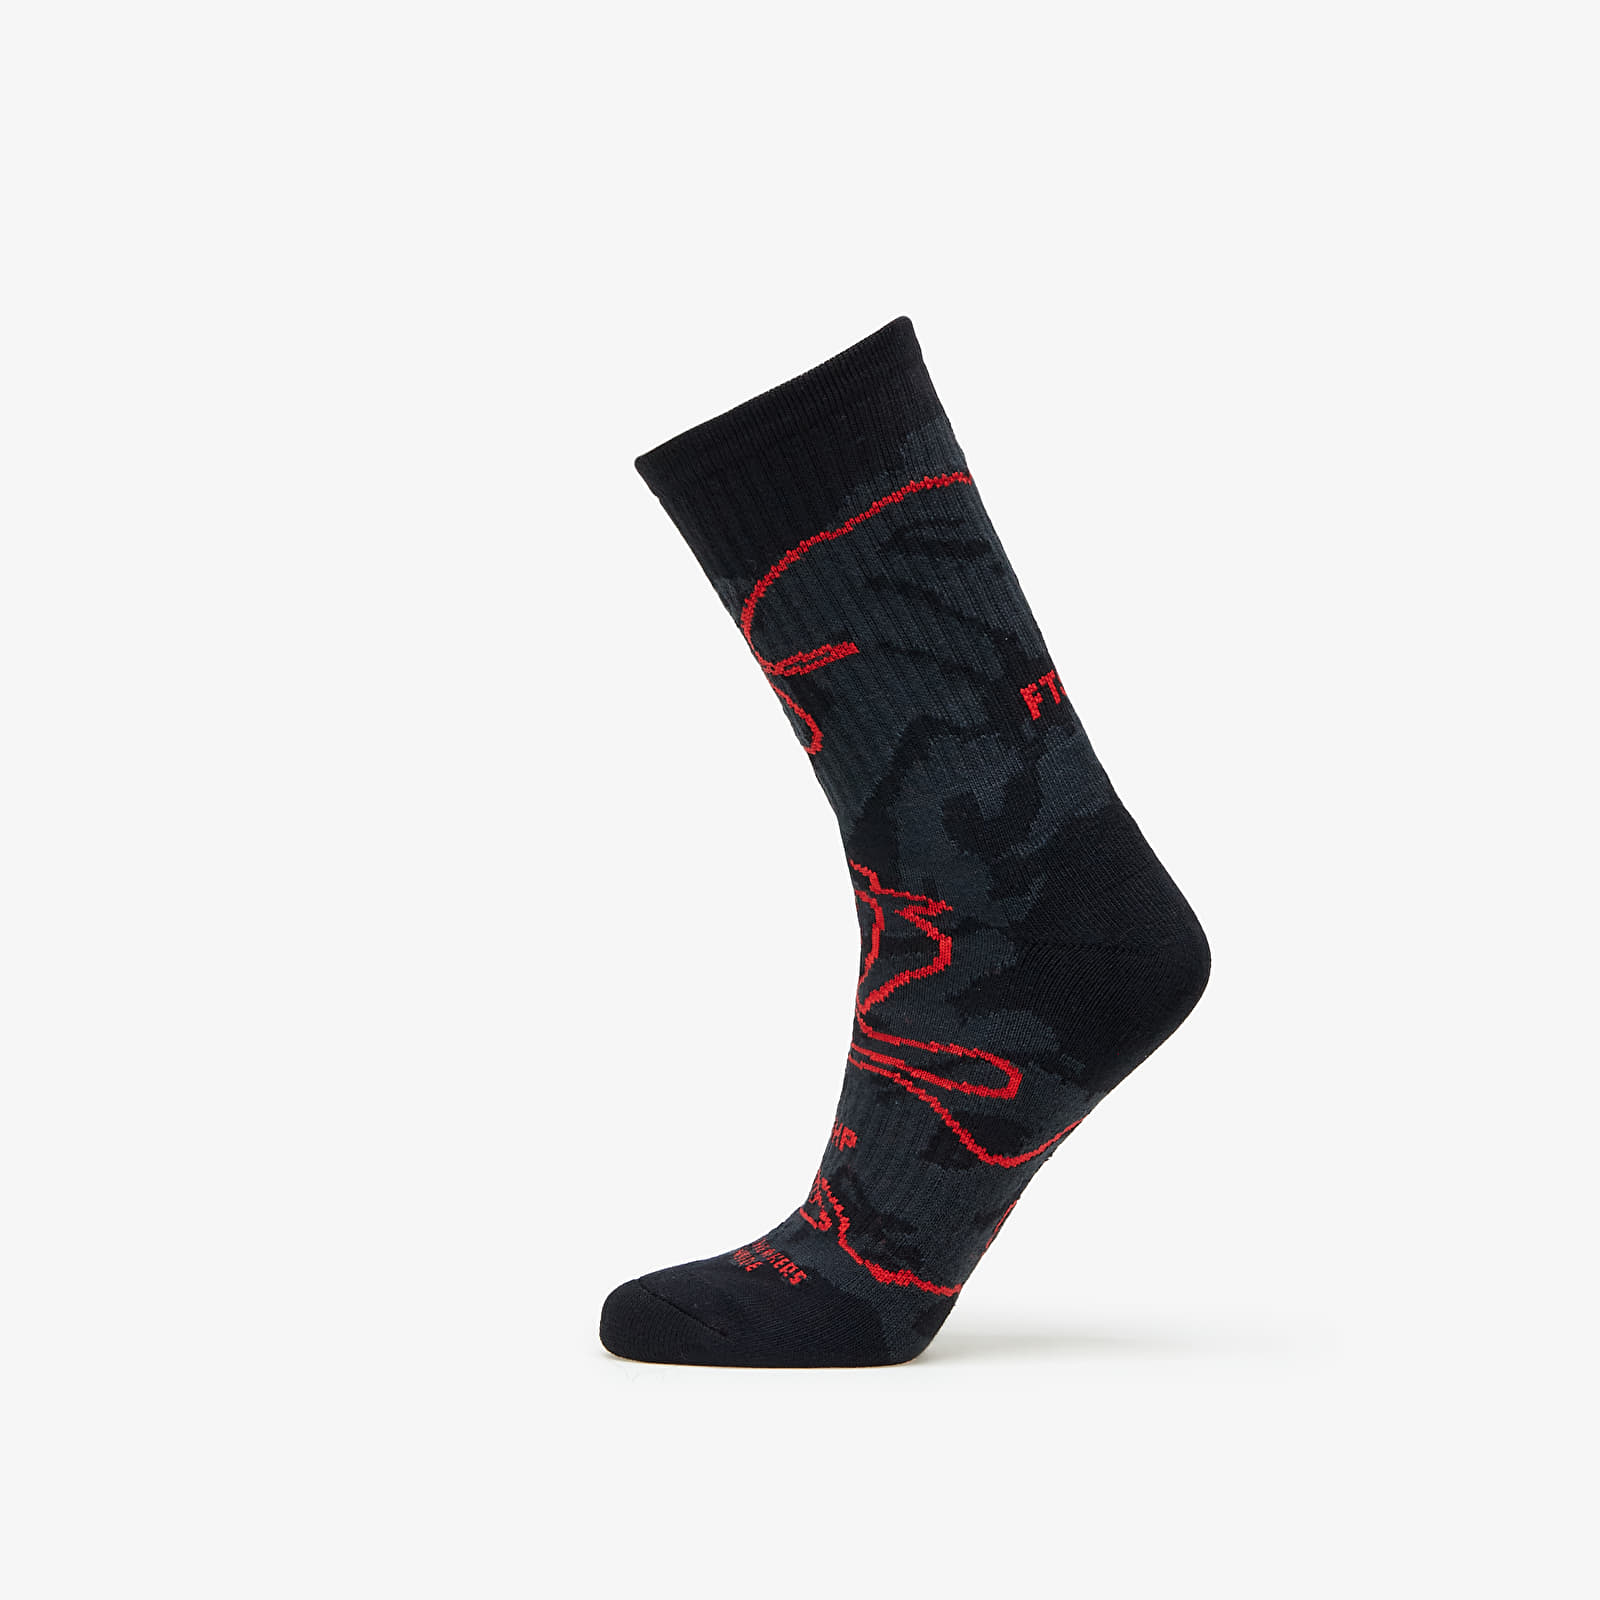 Socks Footshop The More Basketball Socks Black/ Red